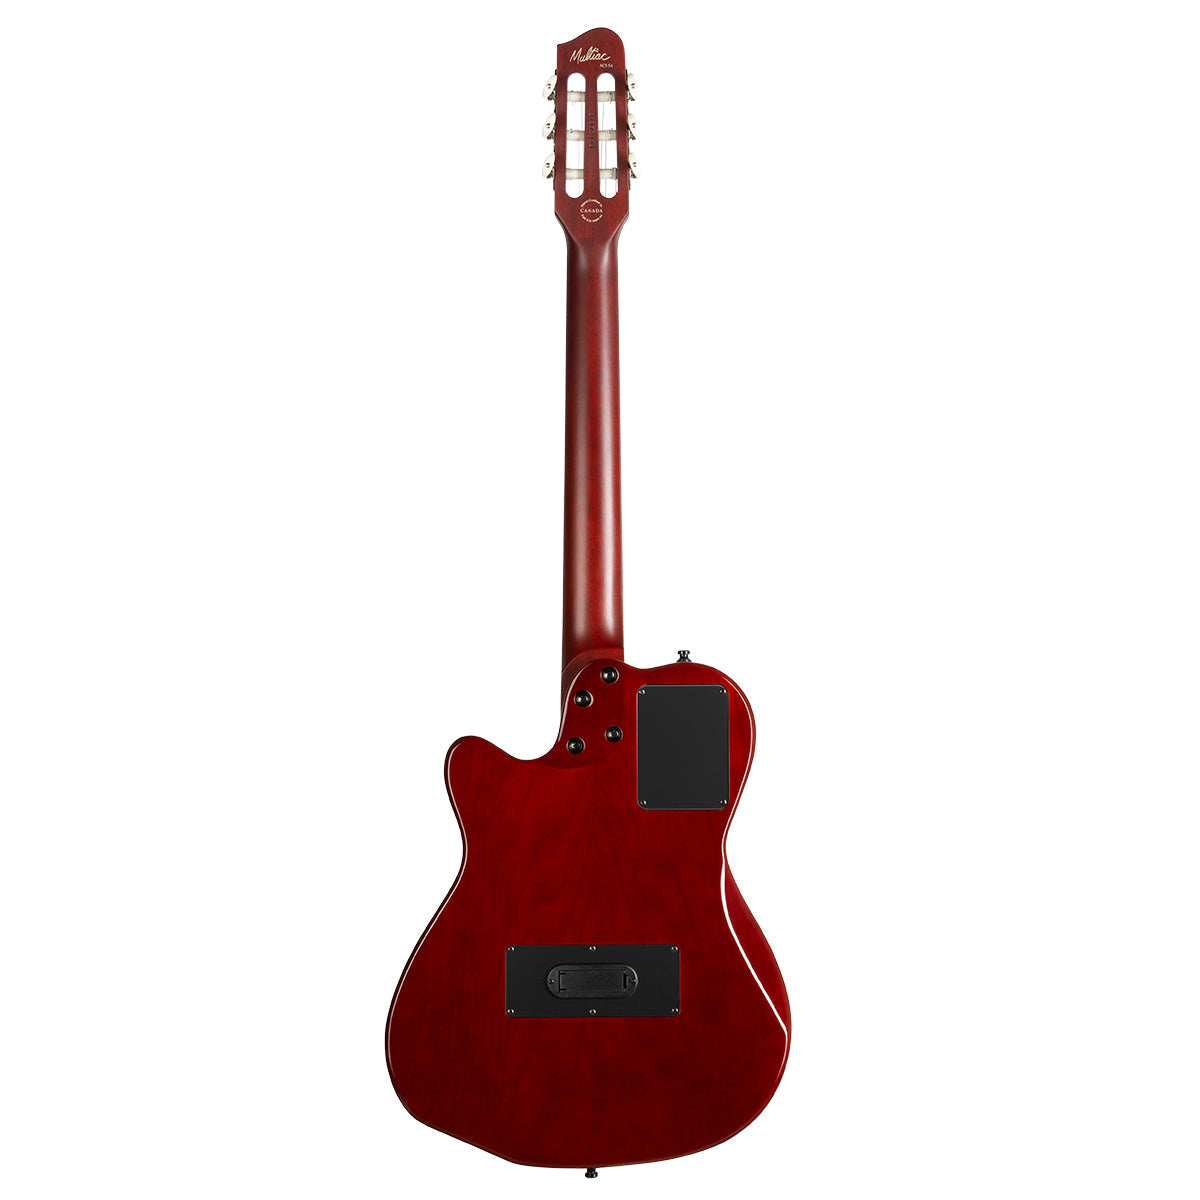 Godin ACS Nylon 2 Voice Guitar ~ Koa Extreme Figure HG, Electric Guitar for sale at Richards Guitars.